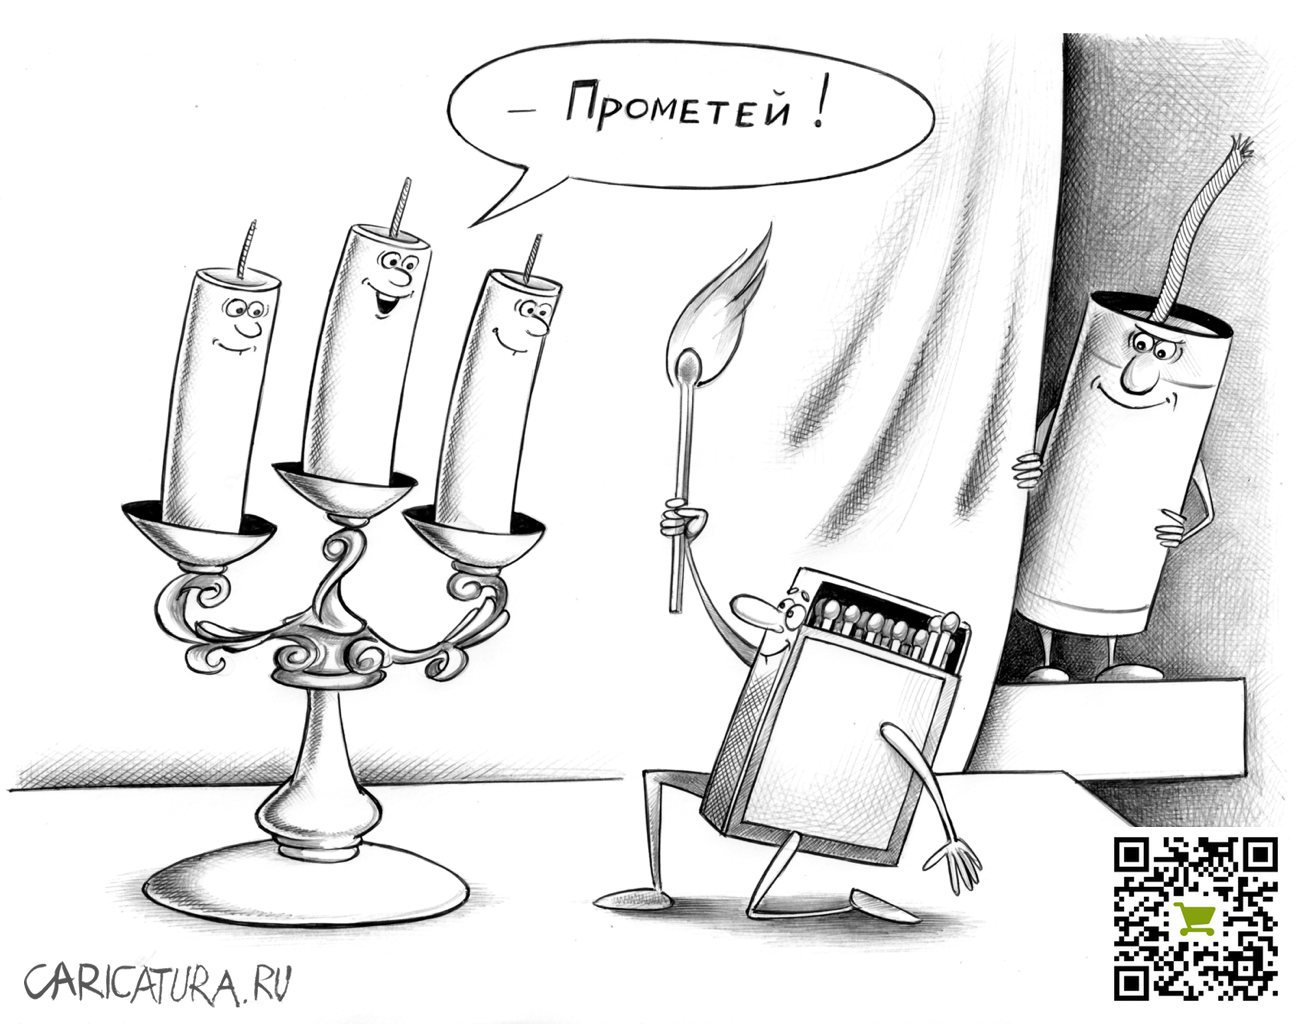 Карикатура "Прометей", Сергей Корсун